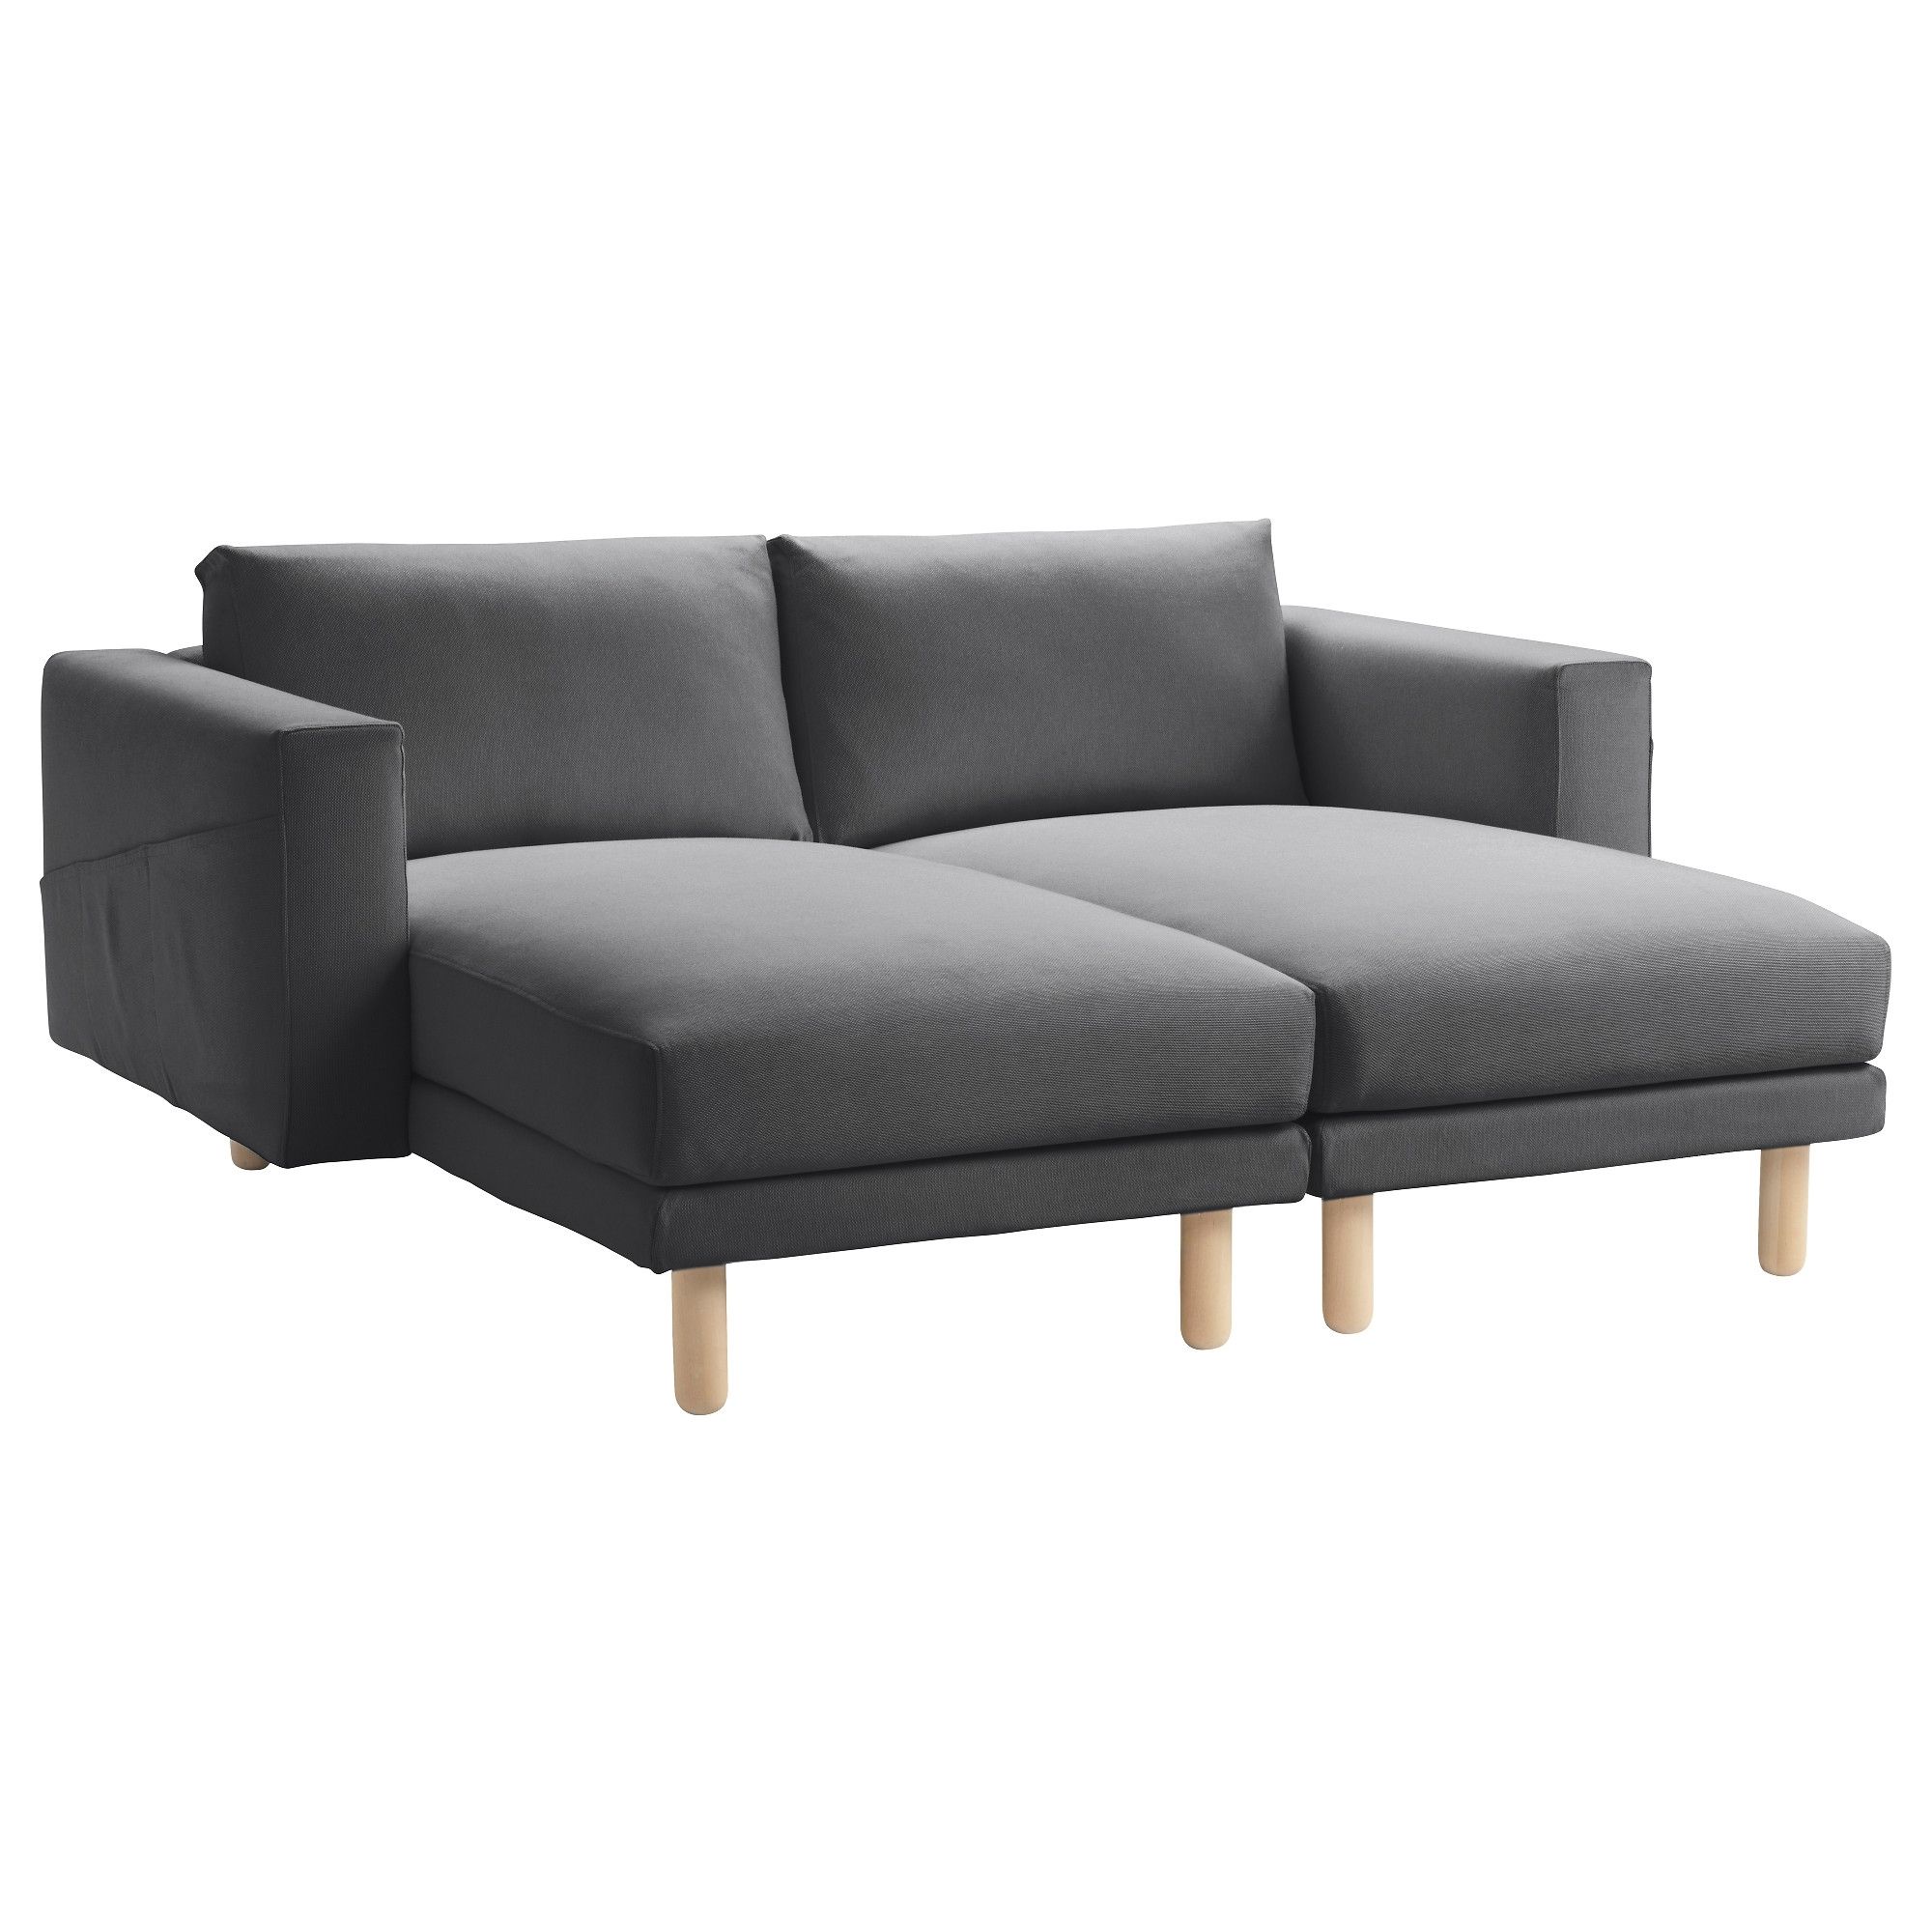 Popular Gray Chaises Inside Norsborg Sectional, 2 Seat – Finnsta Dark Gray – Ikea (View 15 of 15)